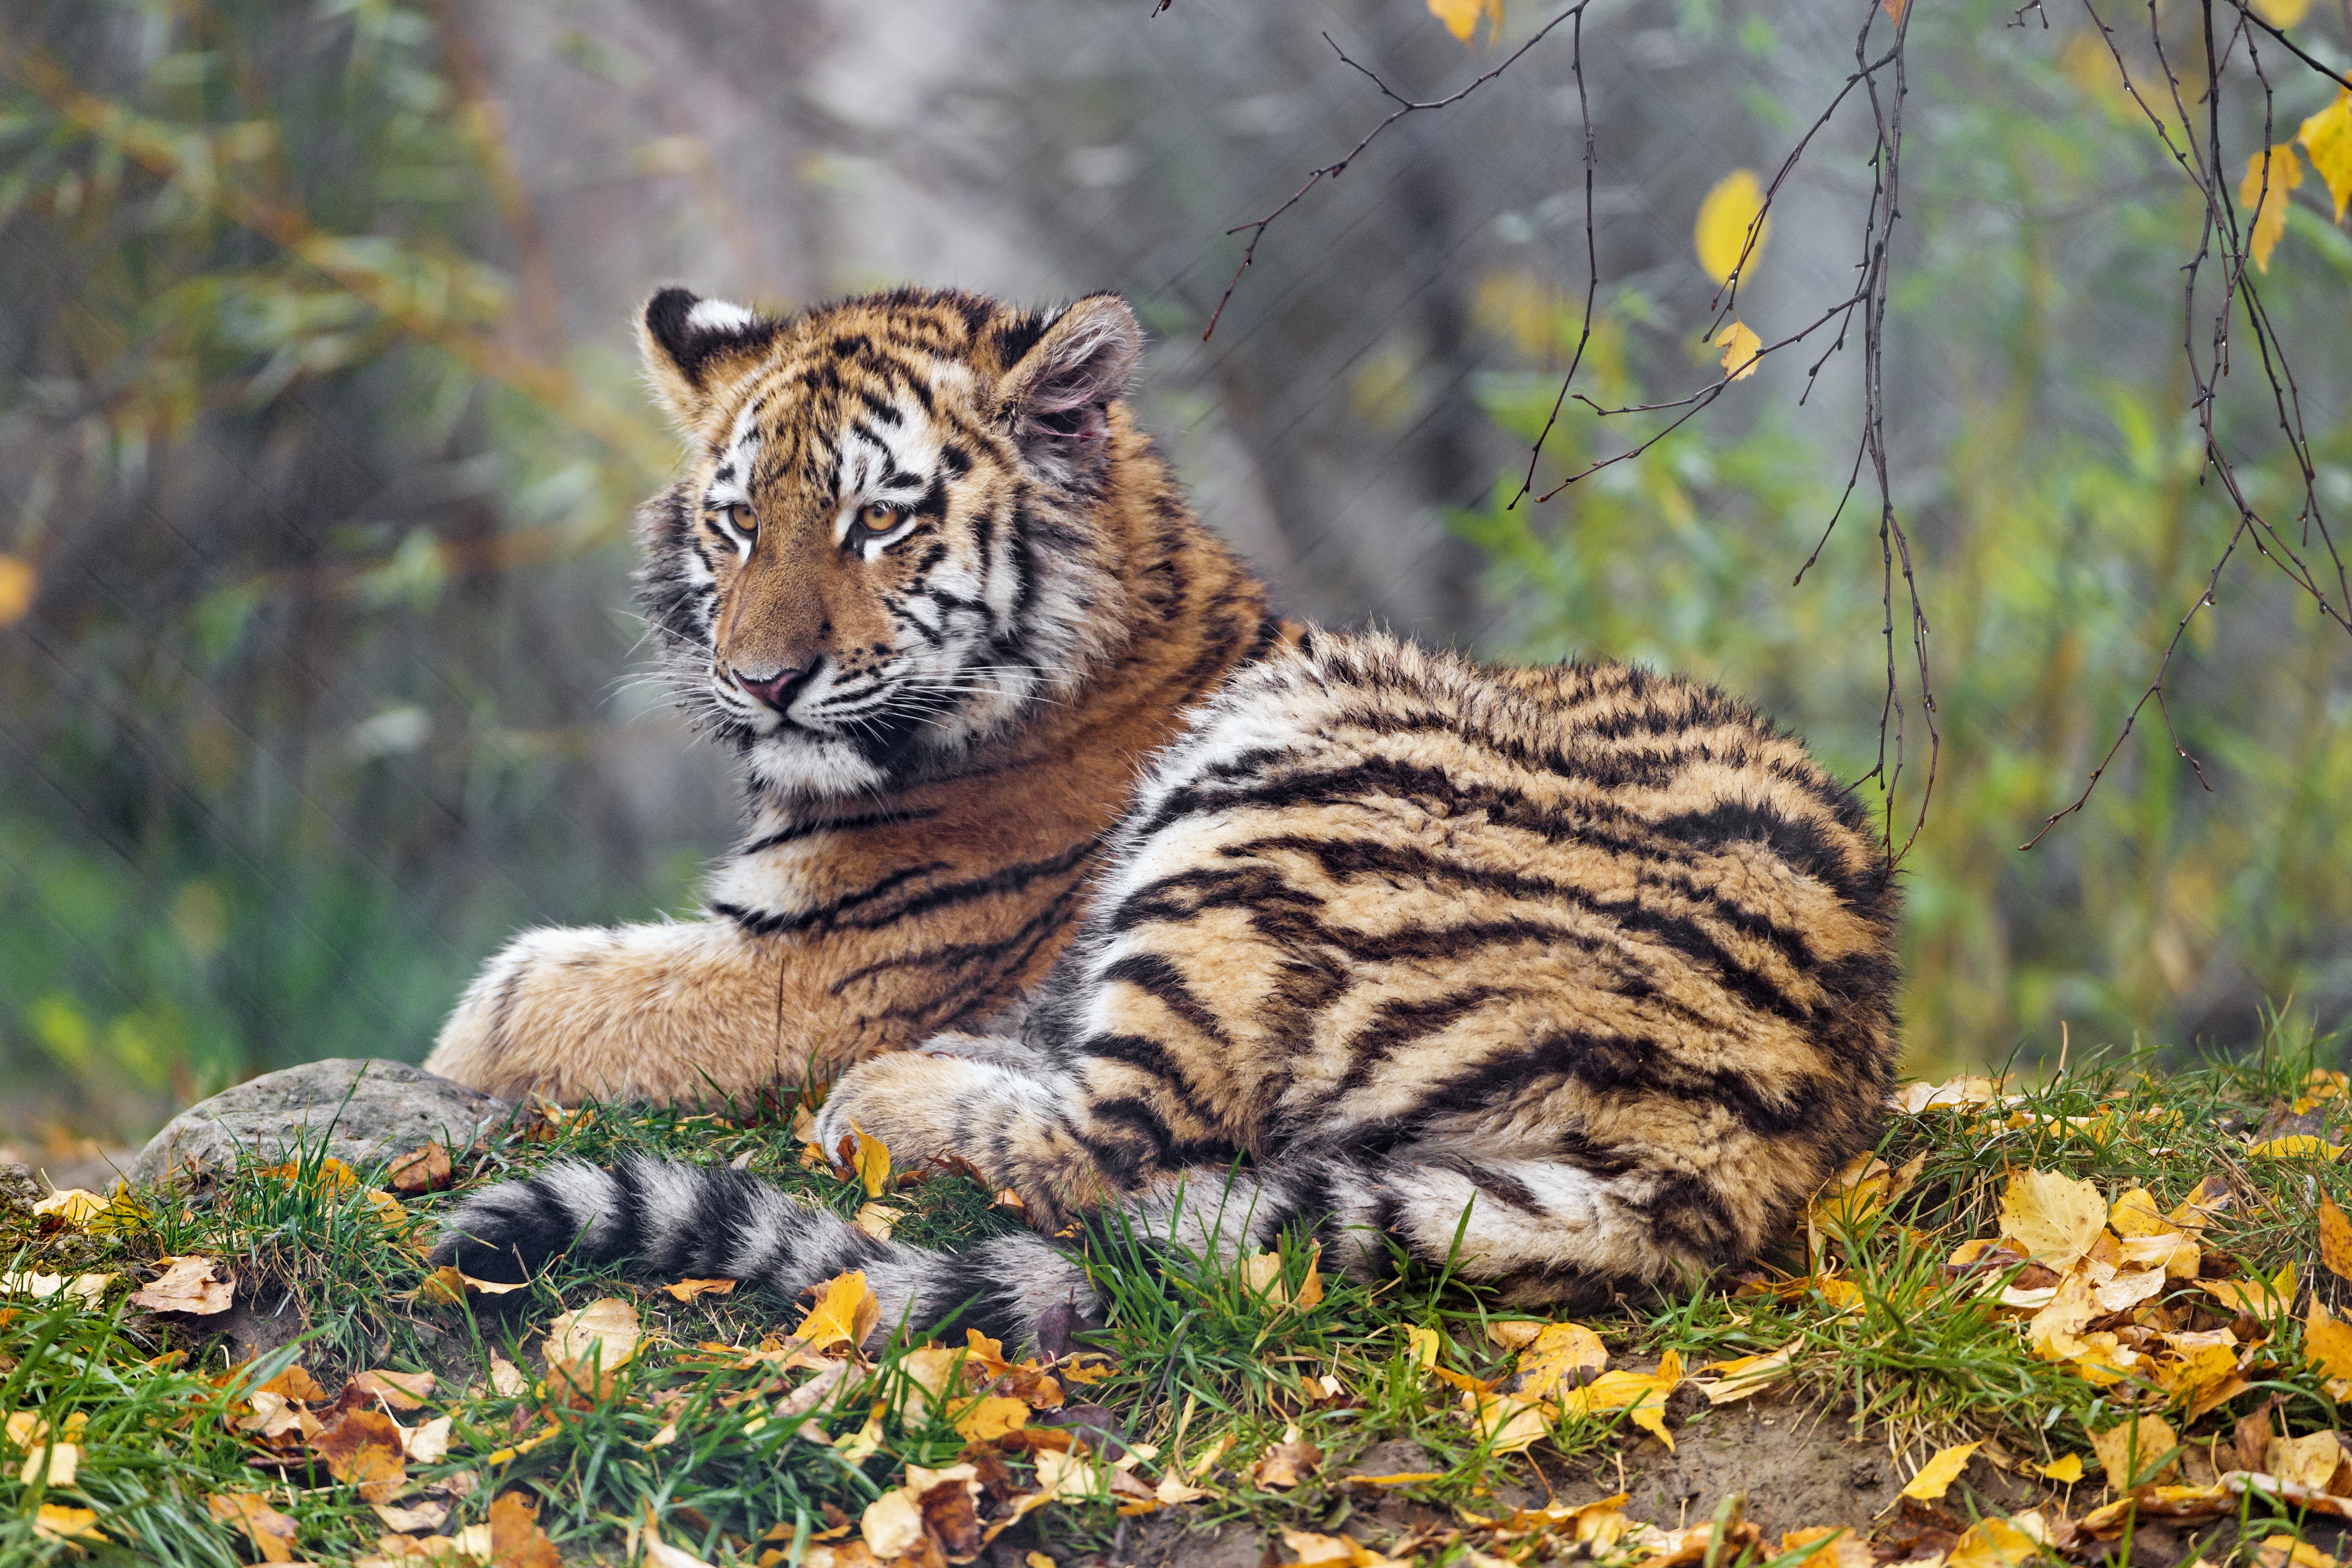 HD wallpaper, Young Tigress, Big Cat, Autumn Leaves, Wild Animal, Portrait, Predator, 5K, Green Grass, Siberian Tiger, Zoo